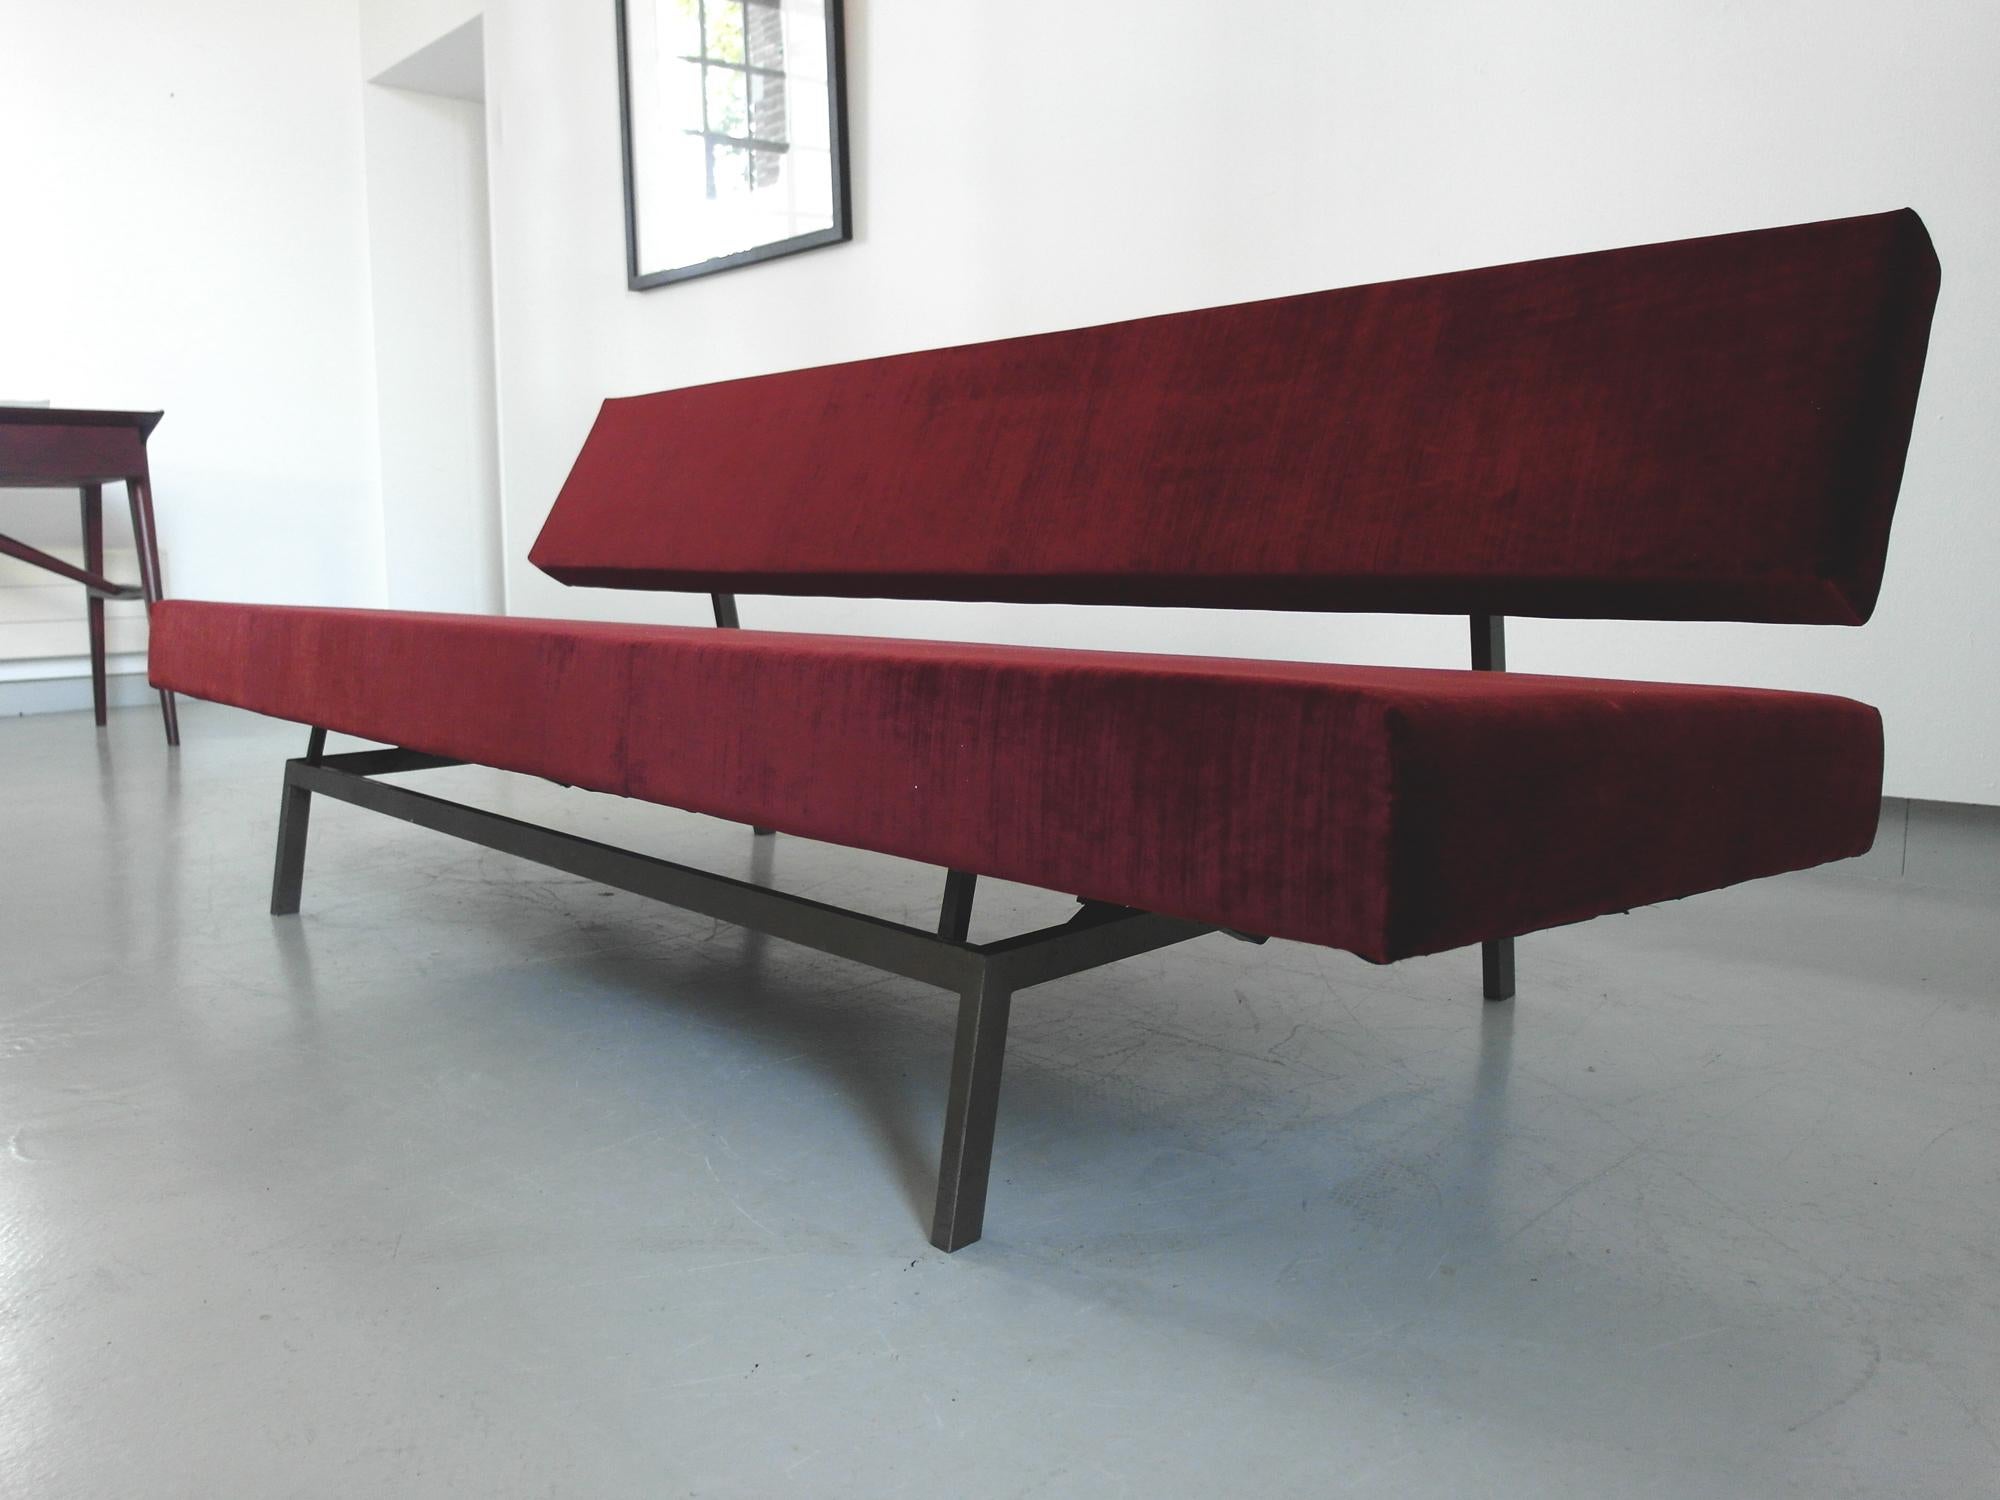 Metal Martin Visser Streamline Sleeper Sofa / Daybed by Spectrum, the Netherlands 1960 For Sale